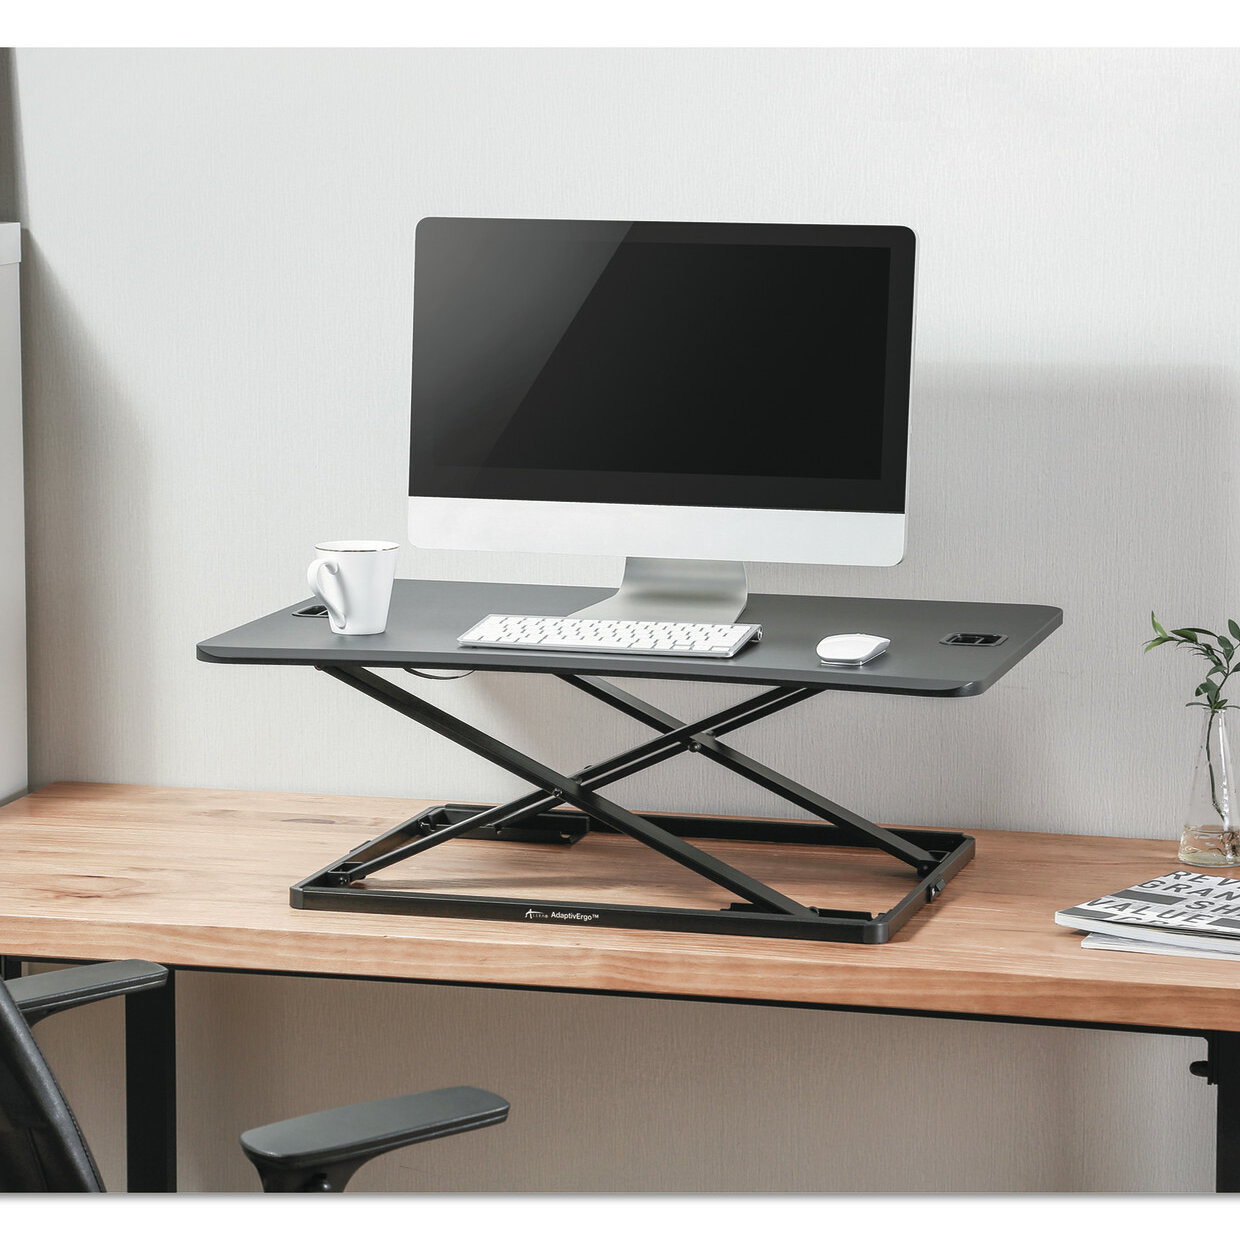 Symple Stuff Atterberry Ultra Slim Height Adjustable Standing Desk